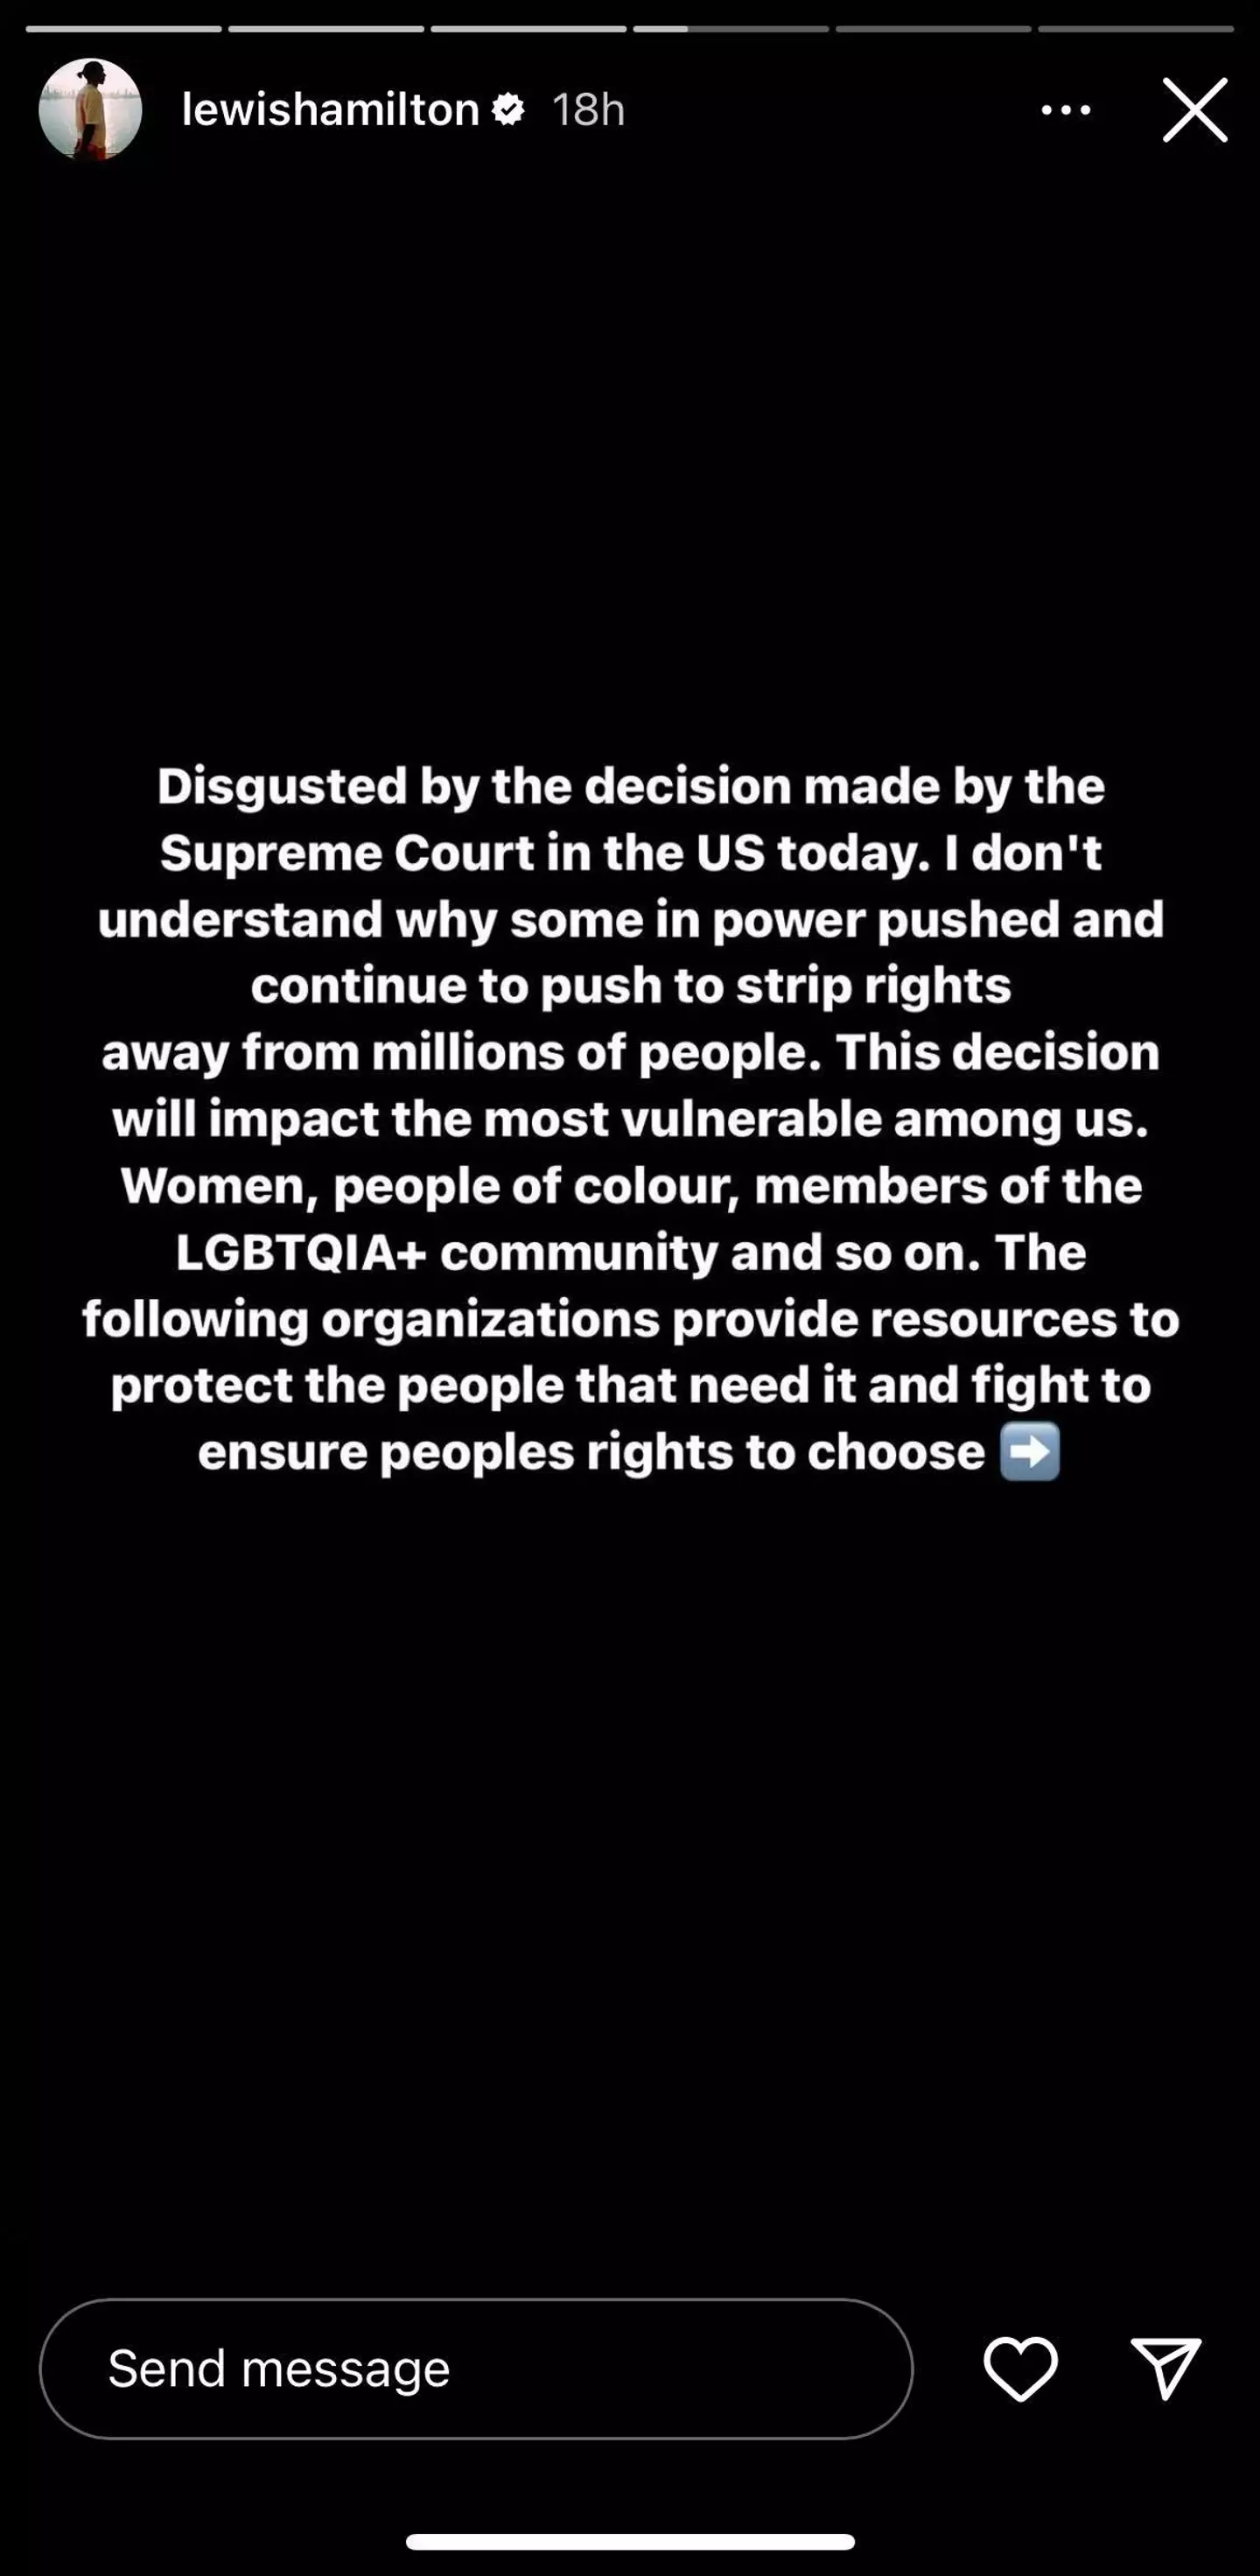 Lewis Hamilton's message on Instagram. Image